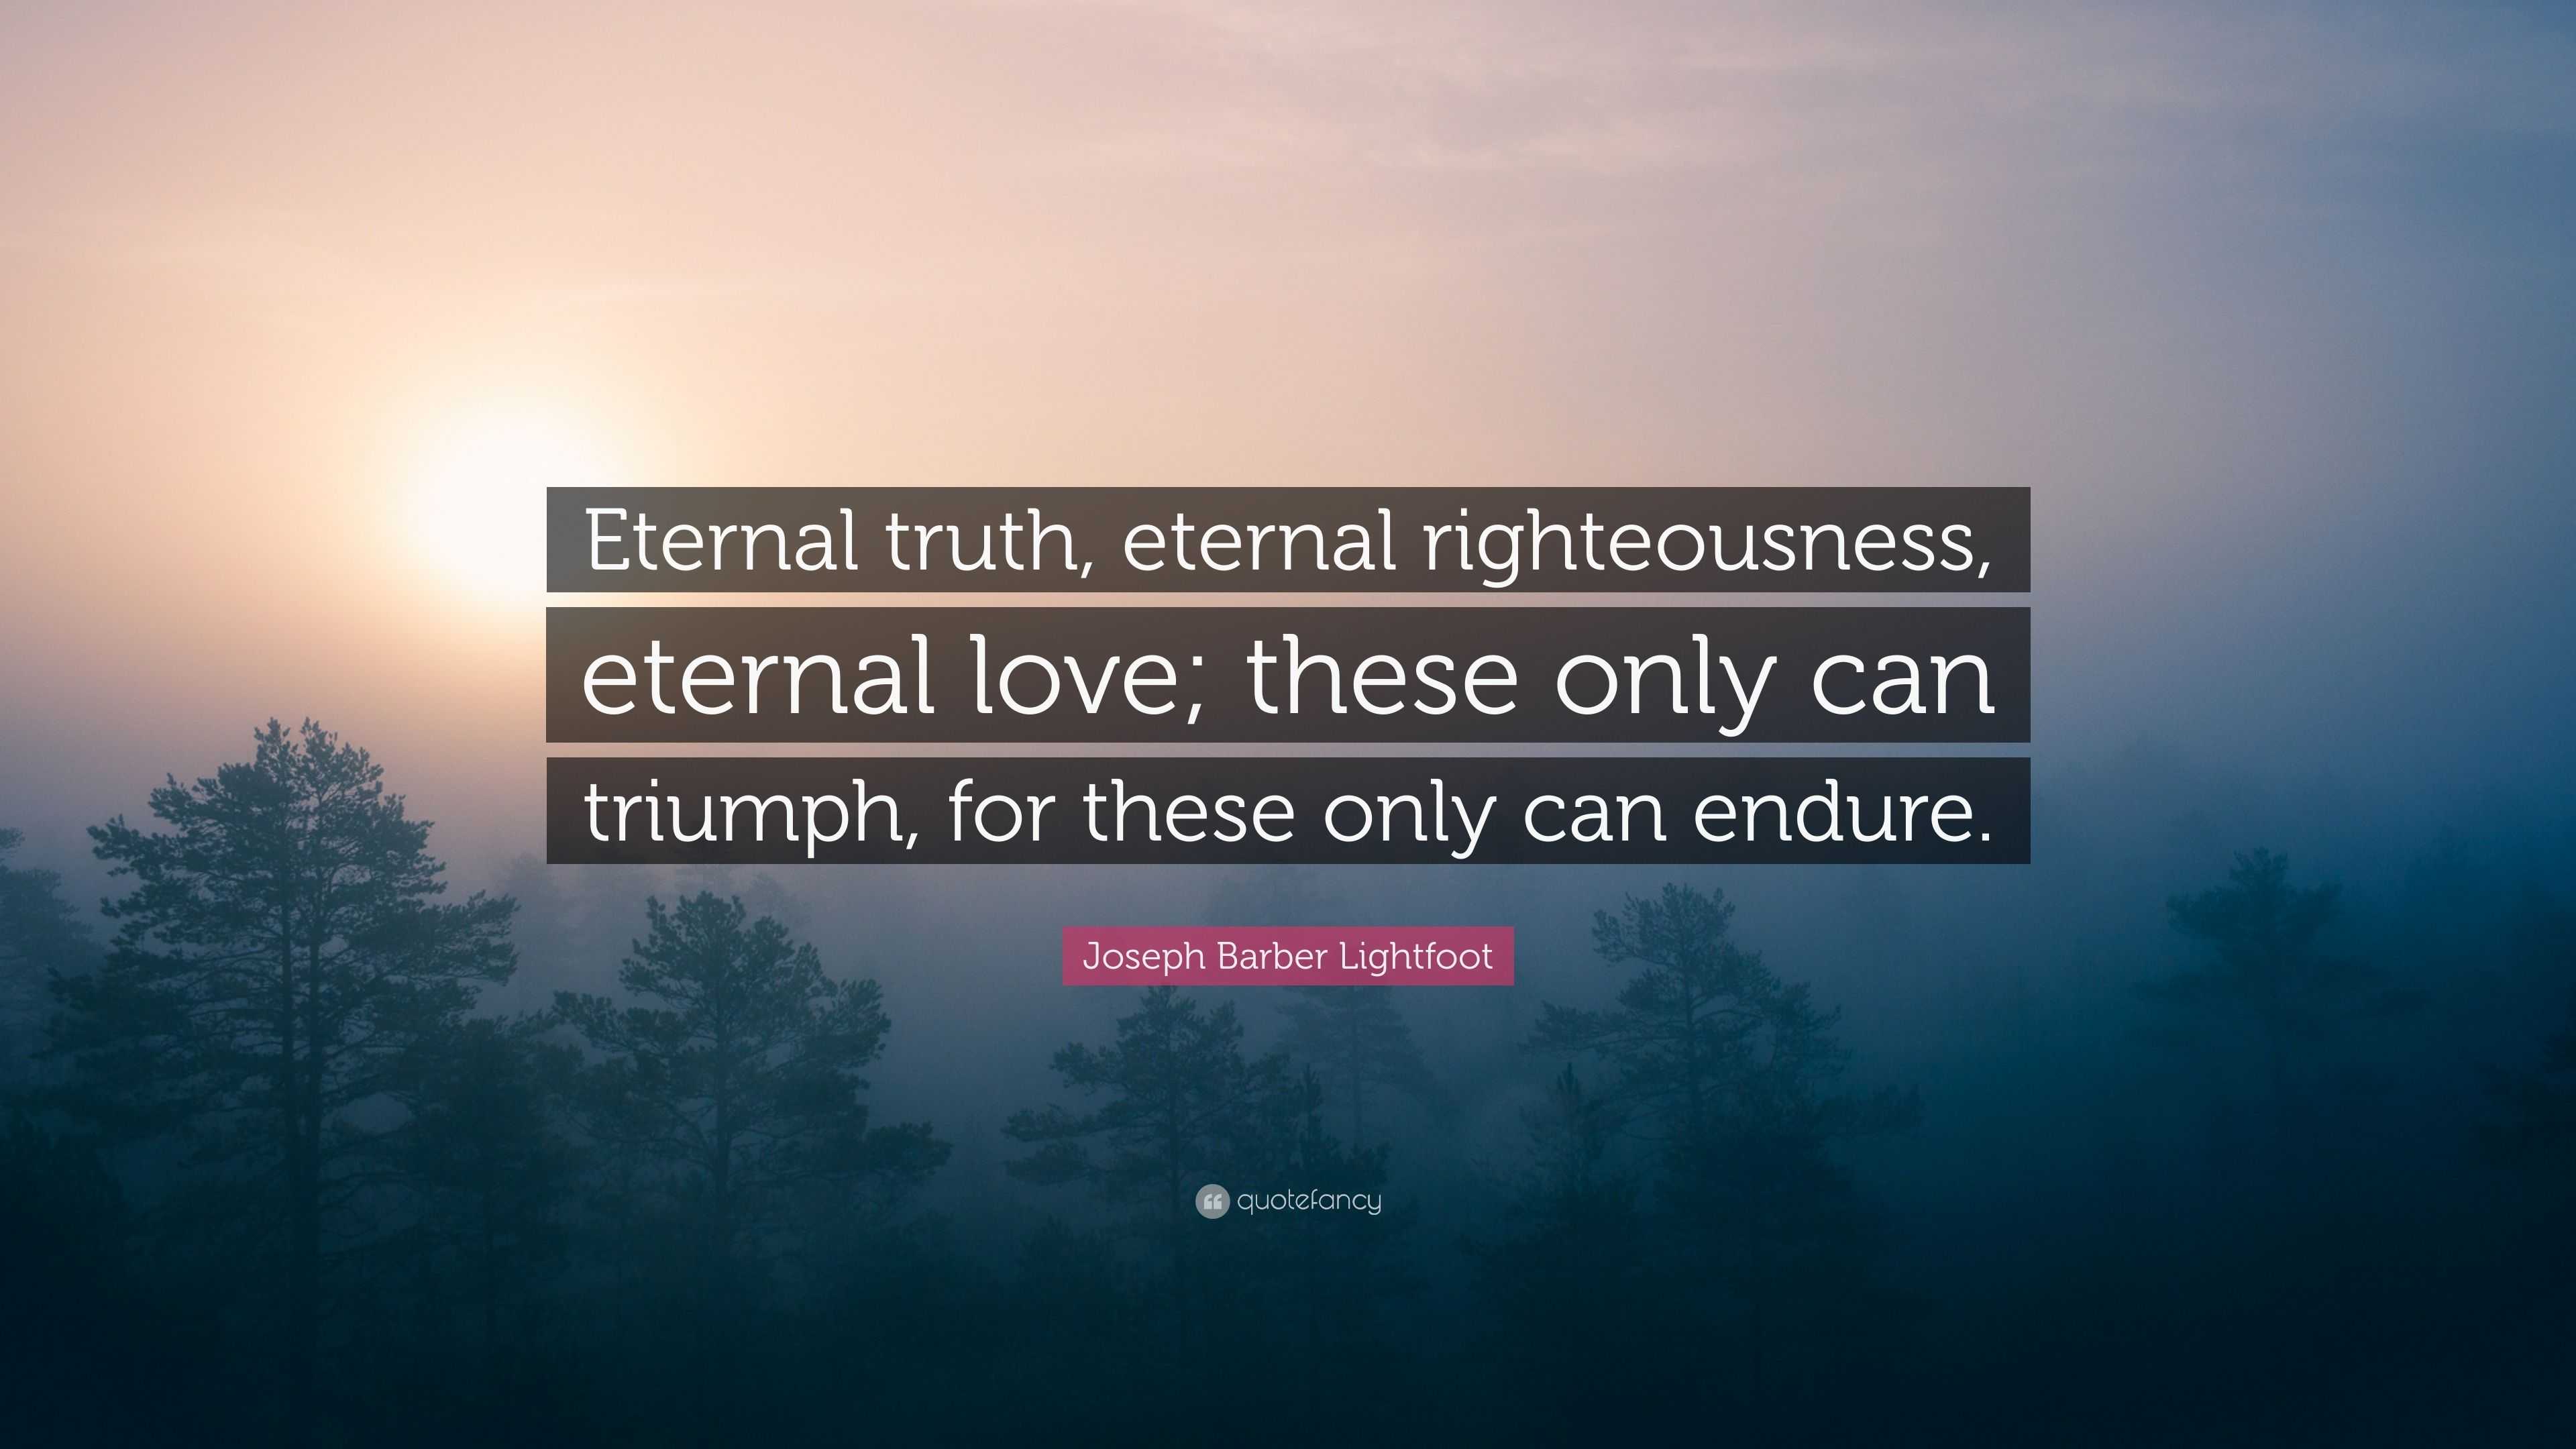 Joseph Barber Lightfoot Quote “Eternal truth eternal righteousness eternal love these